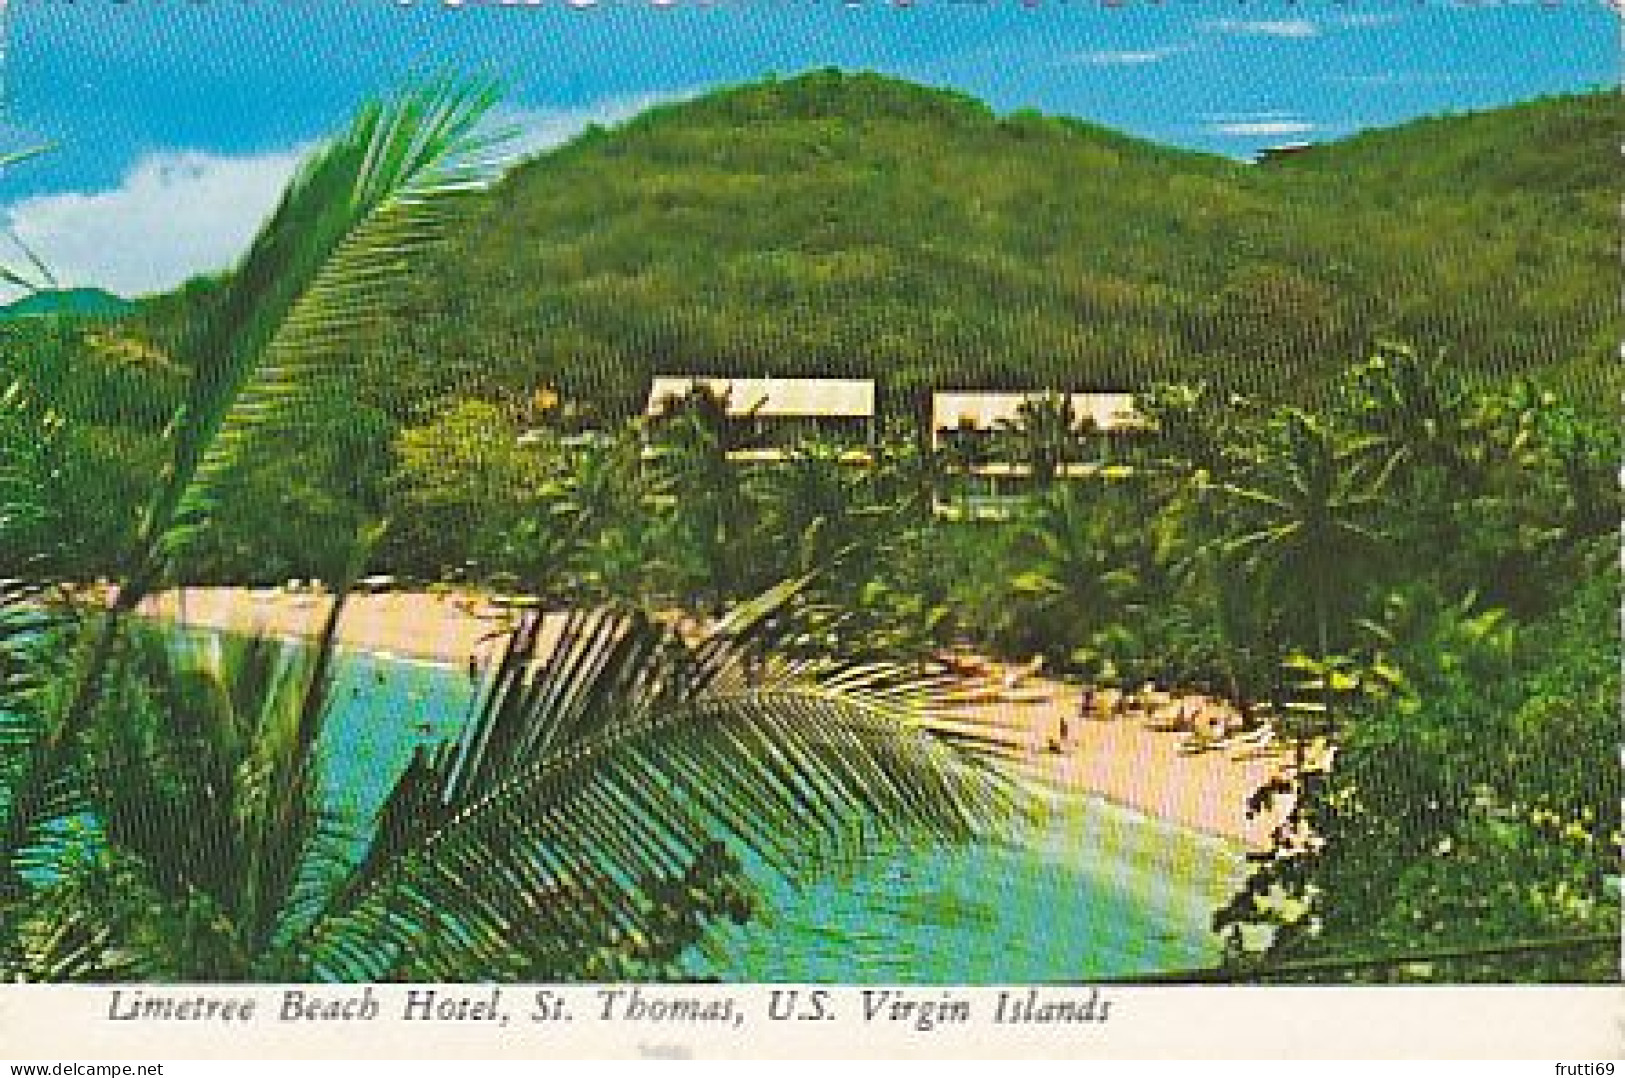 AK 183069 U.S. Virgin Islands - St. Thomas - Limetree Beach Hotel - Virgin Islands, US